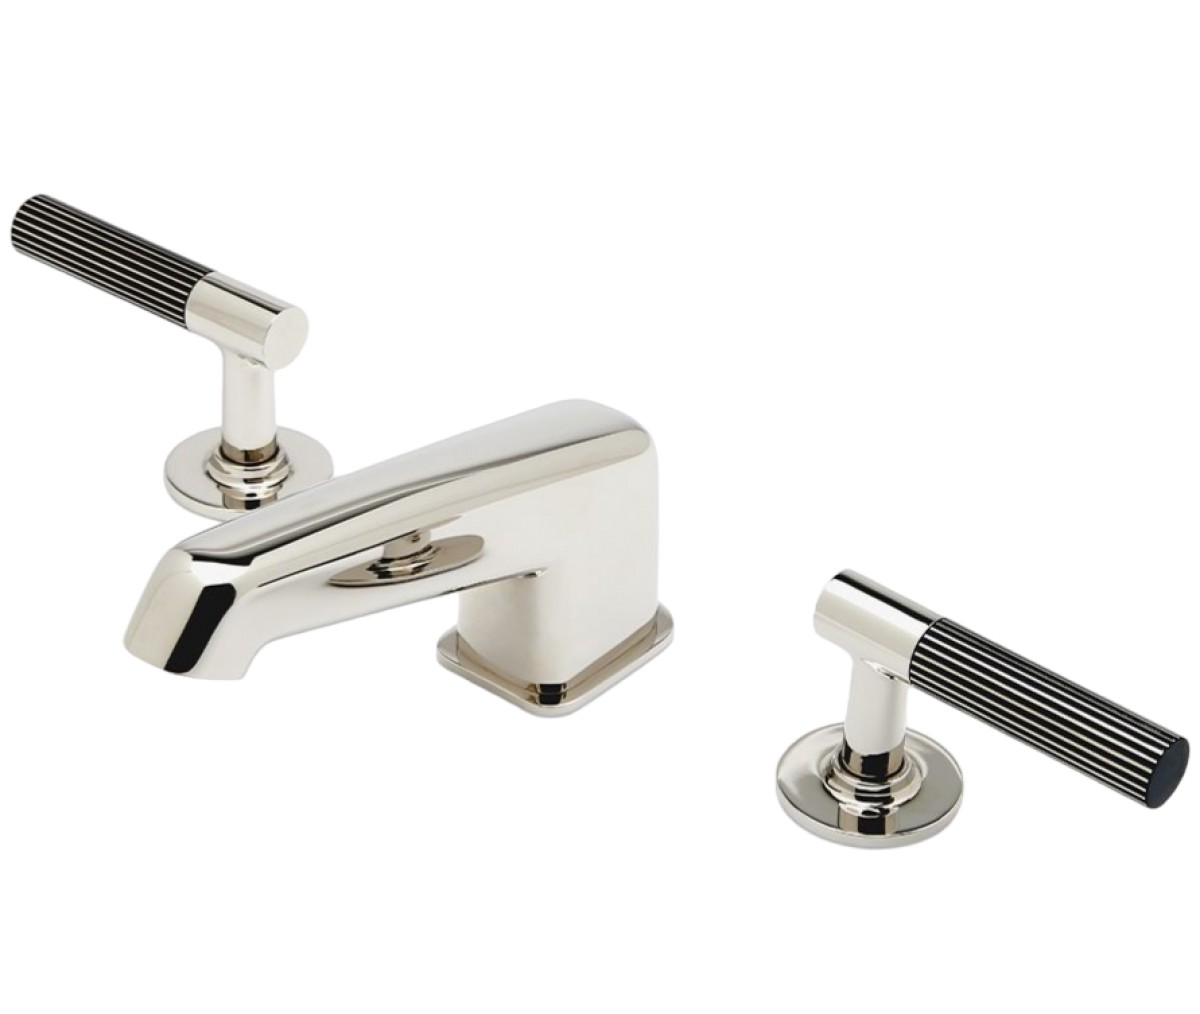 Bond Union Series Lavatory Faucet with Guilloche Pinstripe Lever Handles